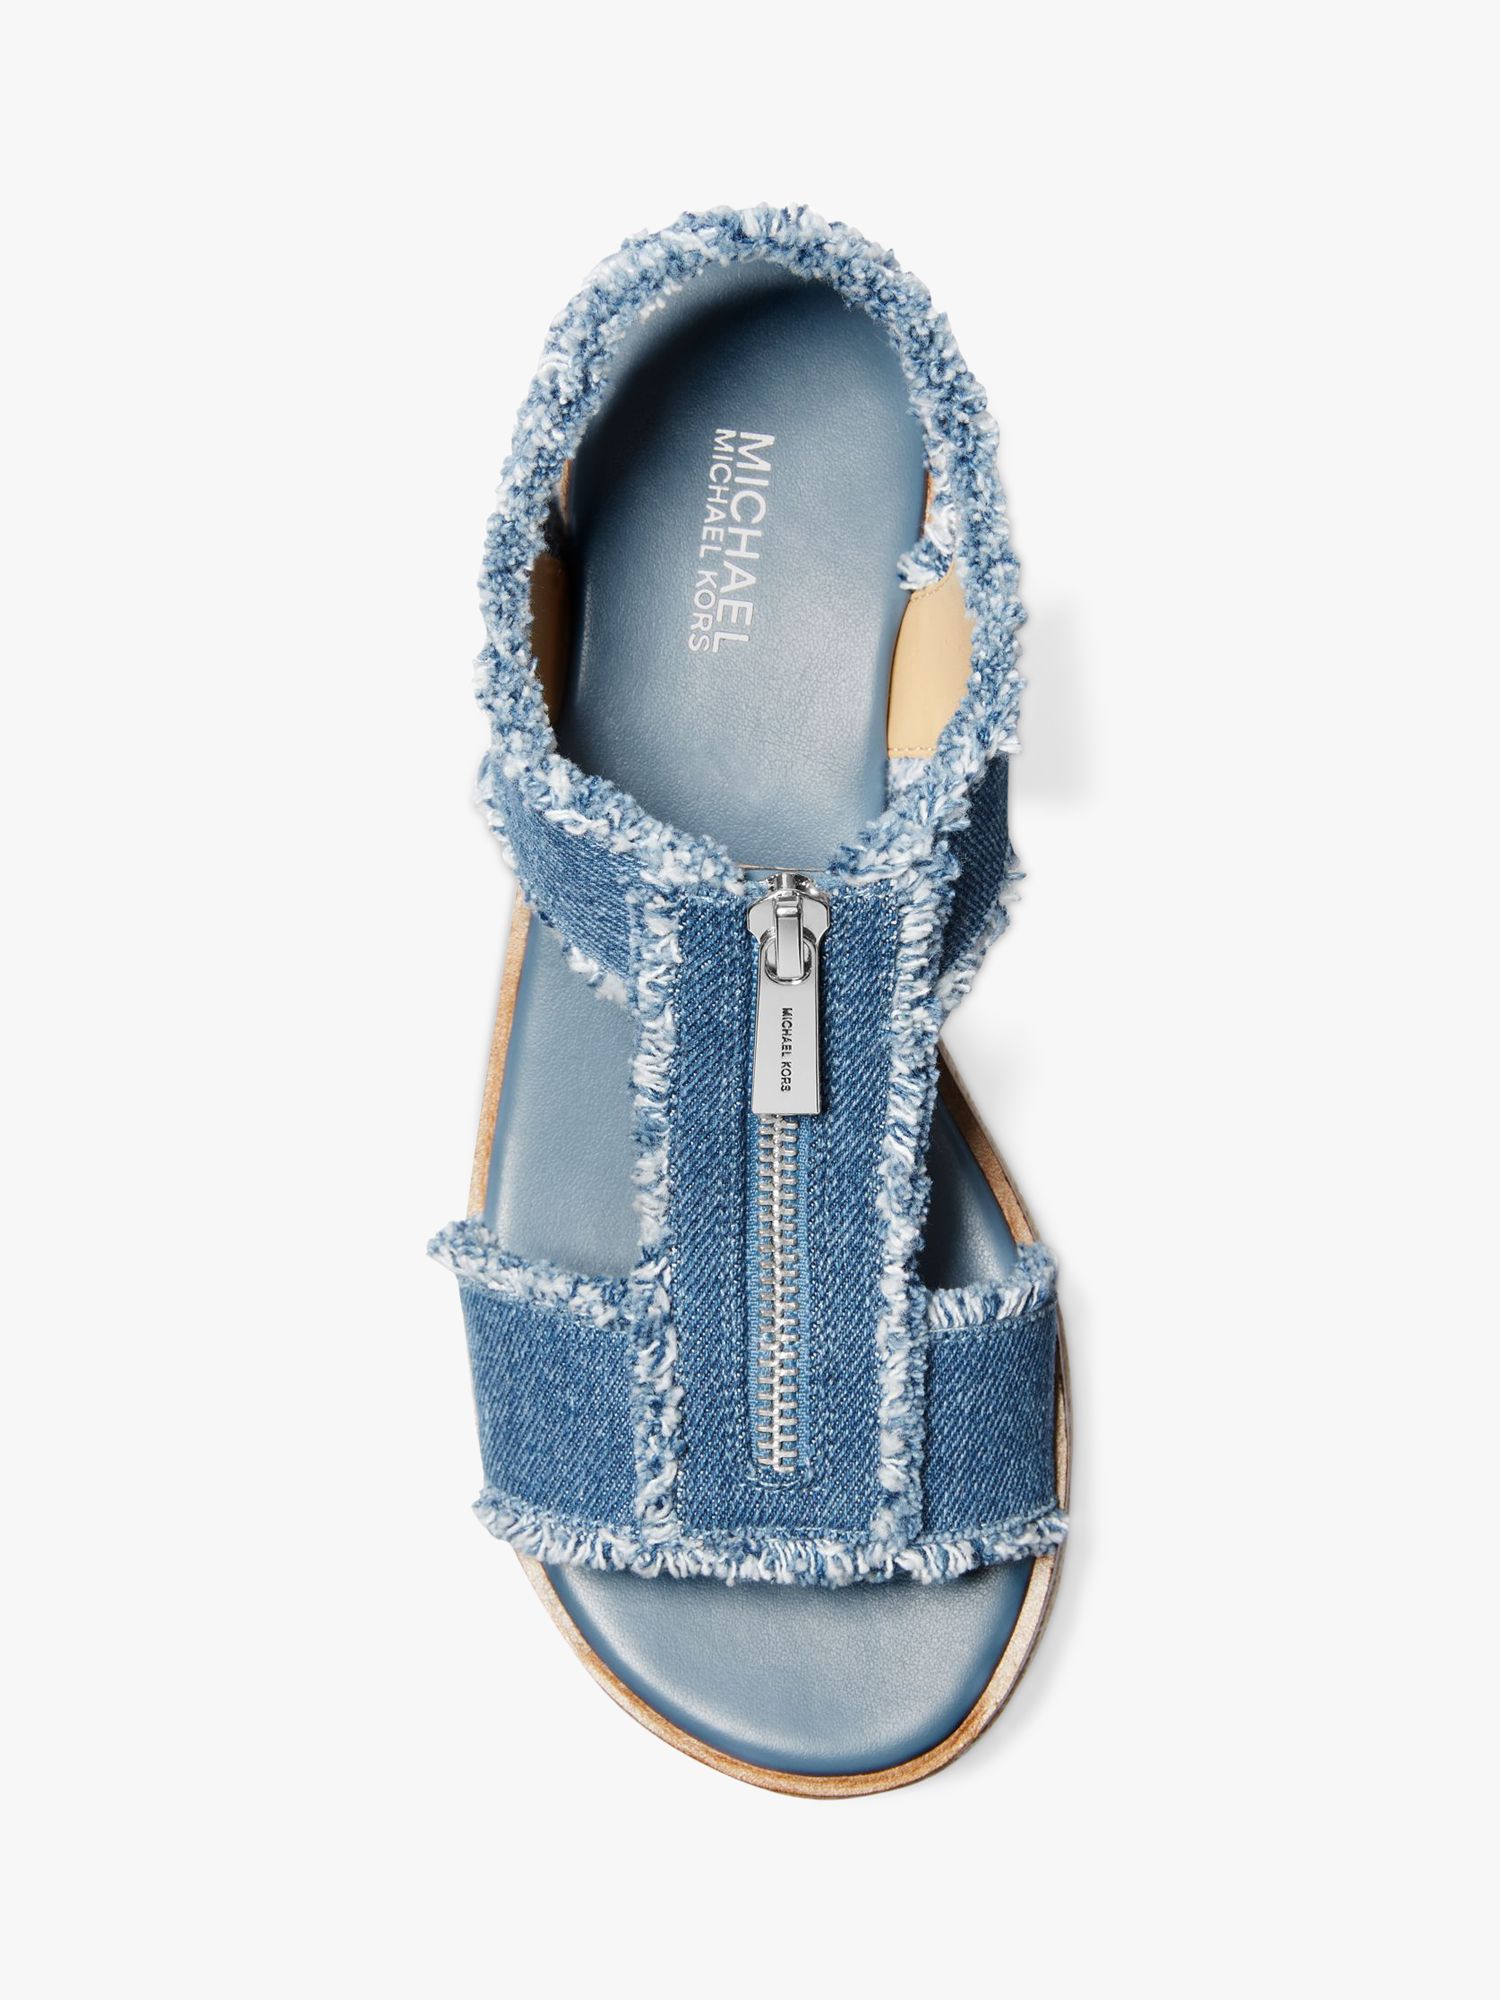 Michael Kors Berkley Denim Espadrille Flatform Sandals, Blue, 6